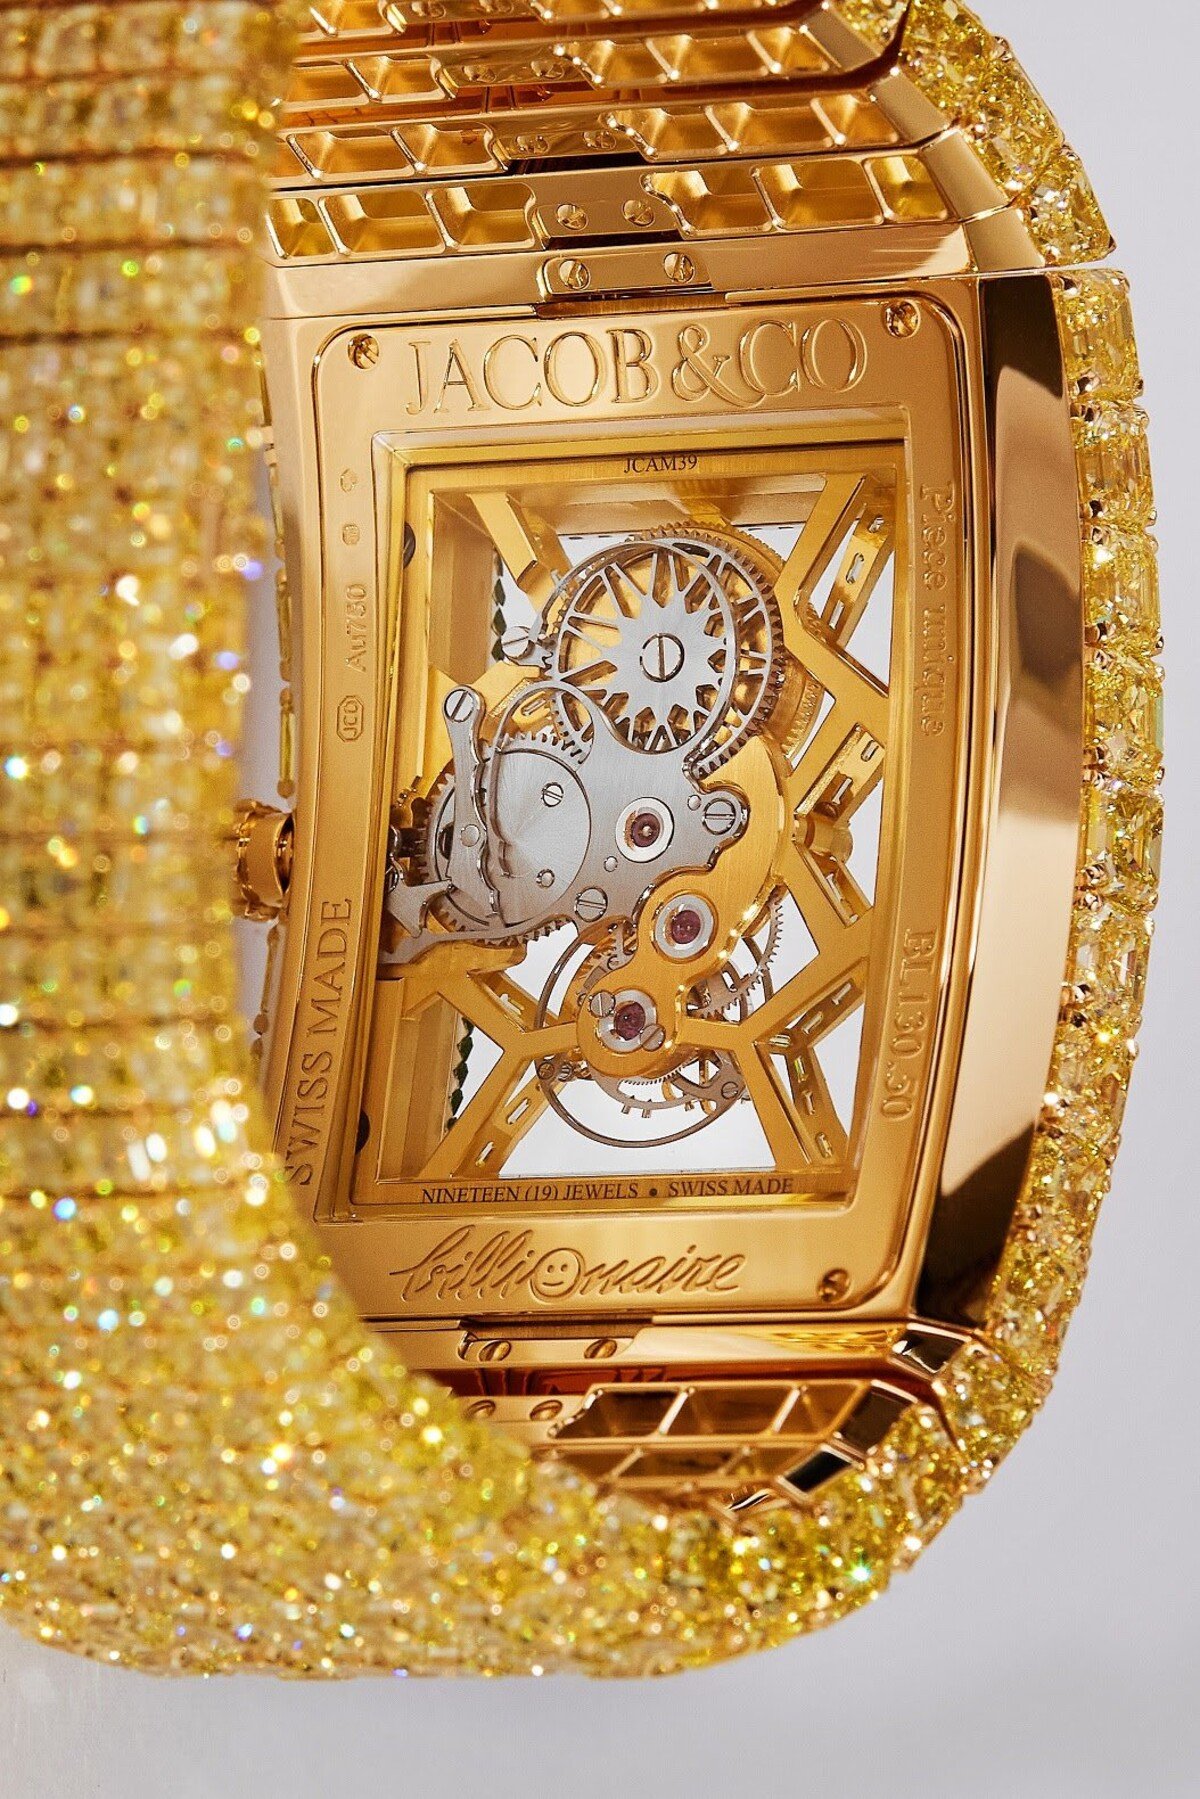 Jacob & Co. Billionaire Timeless Treasure